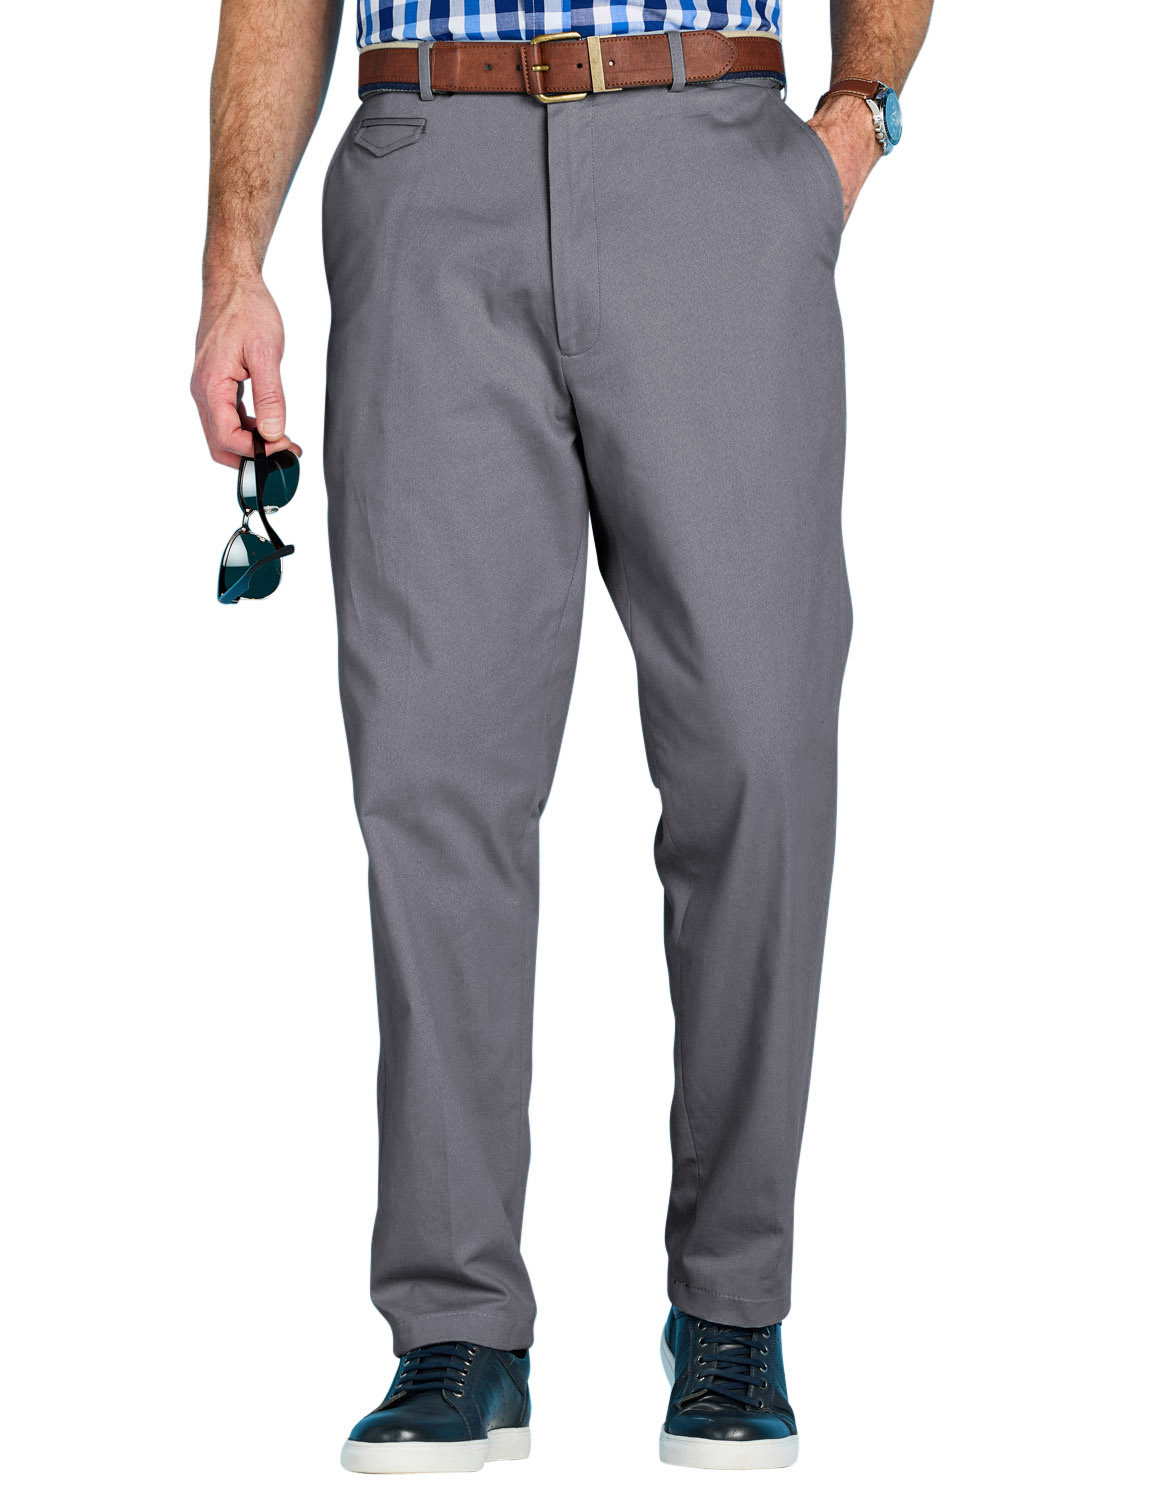 Pegasus cotton chino trouser | classic and versatile pants | eBay